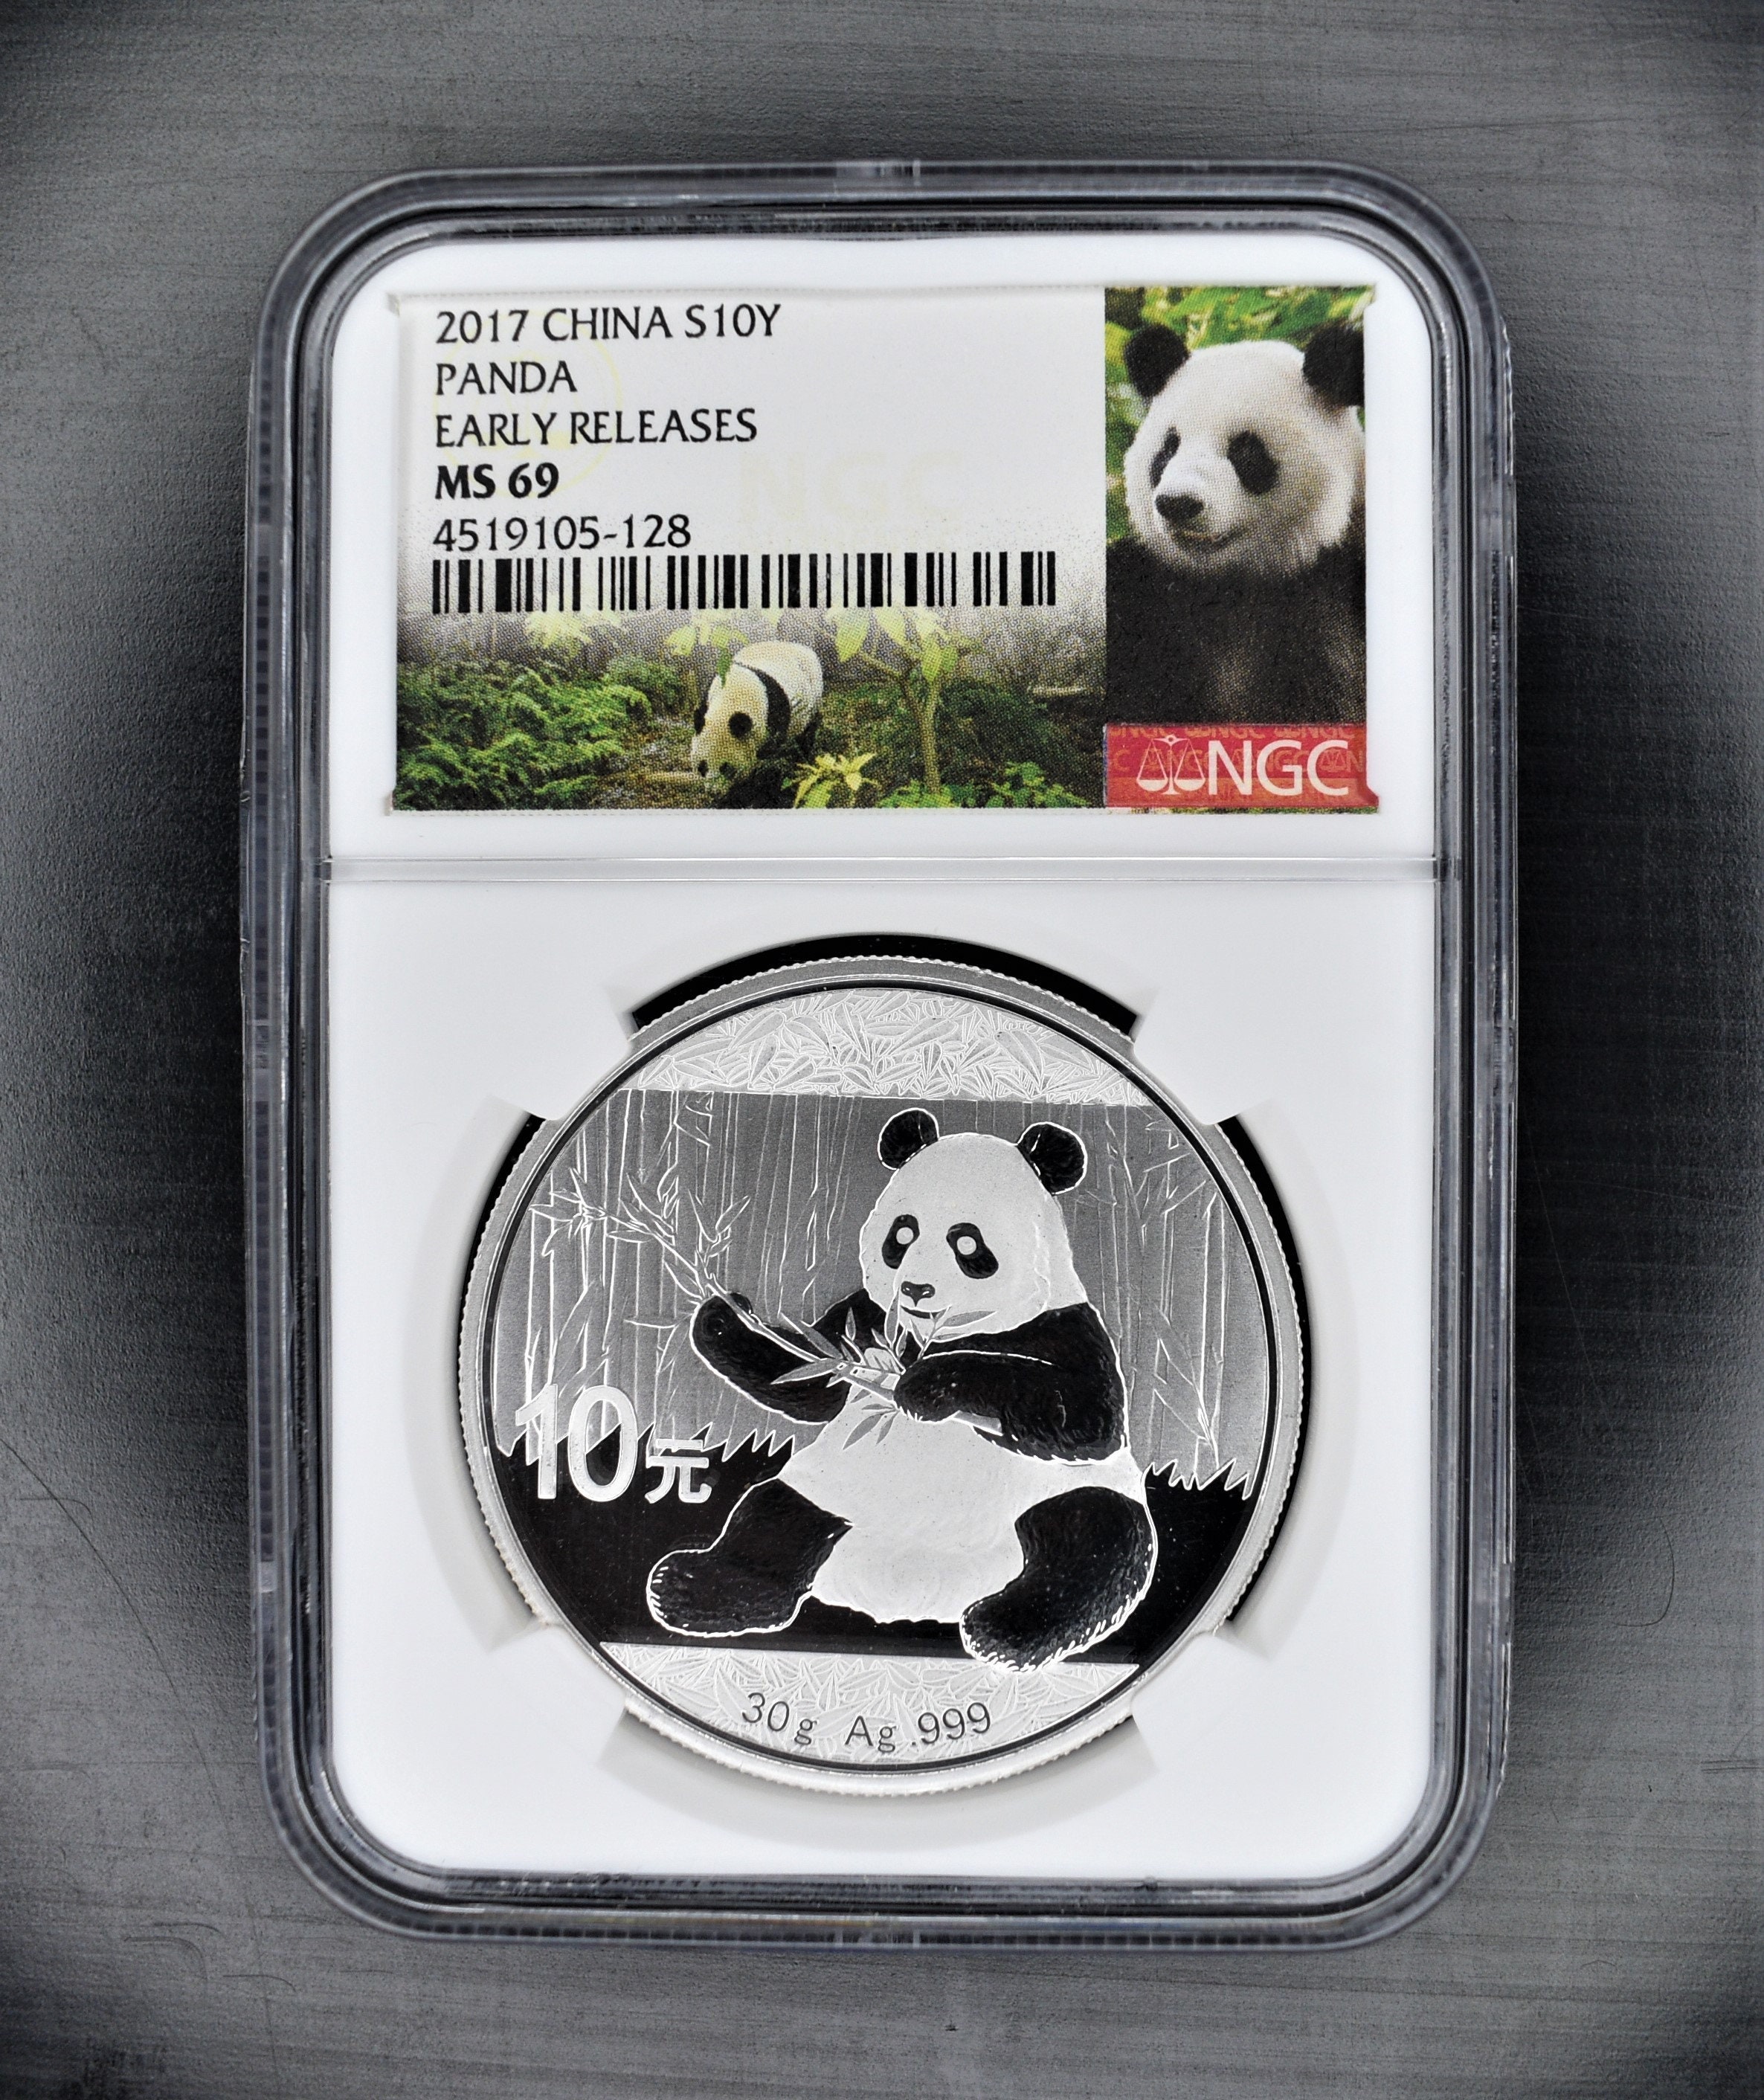 China Panda NGC Graded - MS70 Early Releases 2017 Panda 30 Grams Silver Coin 